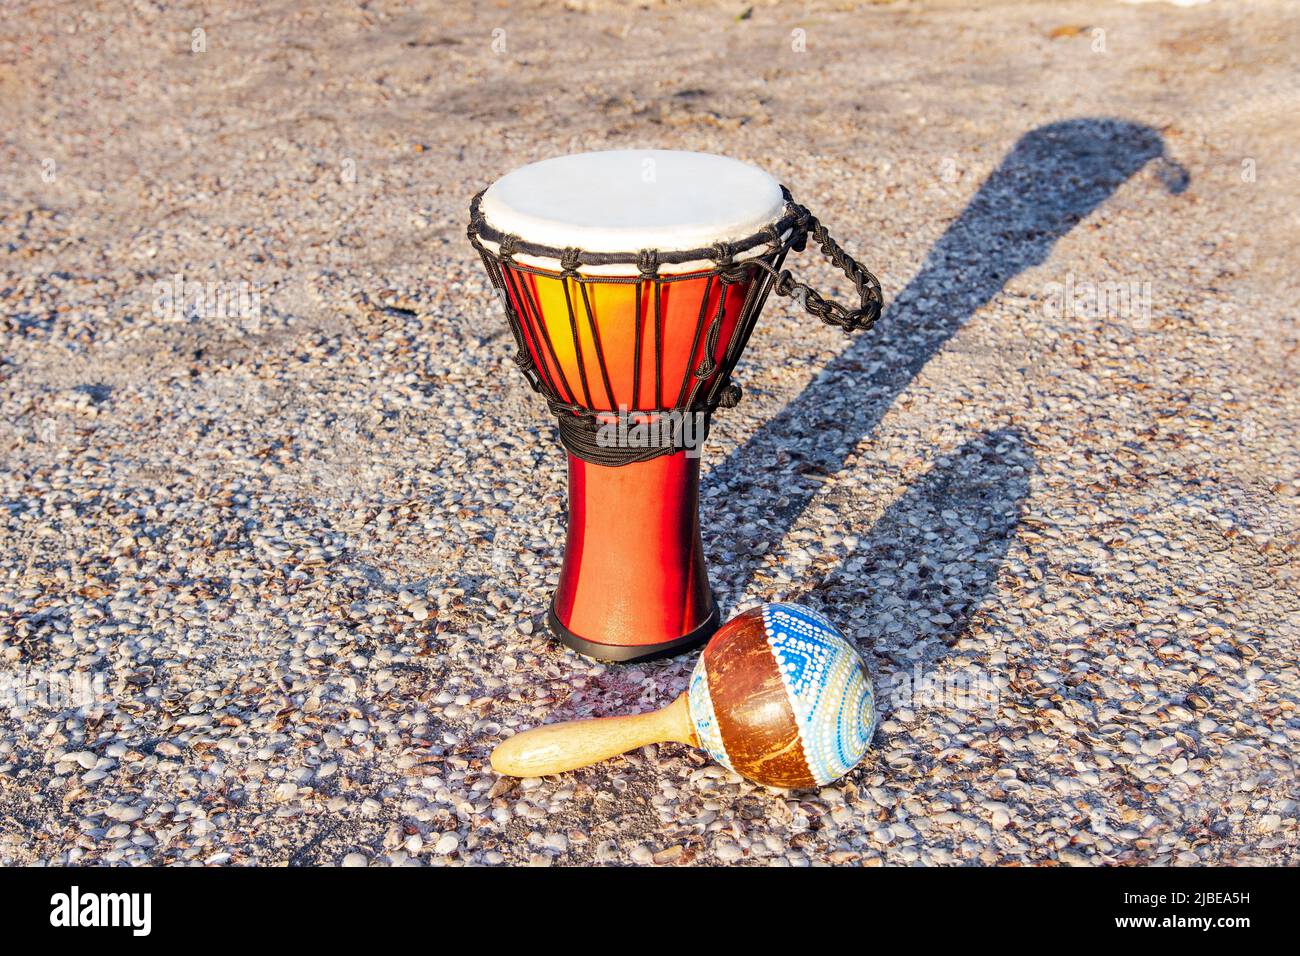 Afrikanisches Schlaginstrument Djembe und Marokas auf dem Sand in der Nähe des Ozeans. National African and Latin American Exotic Percussion Instruments at the Stockfoto